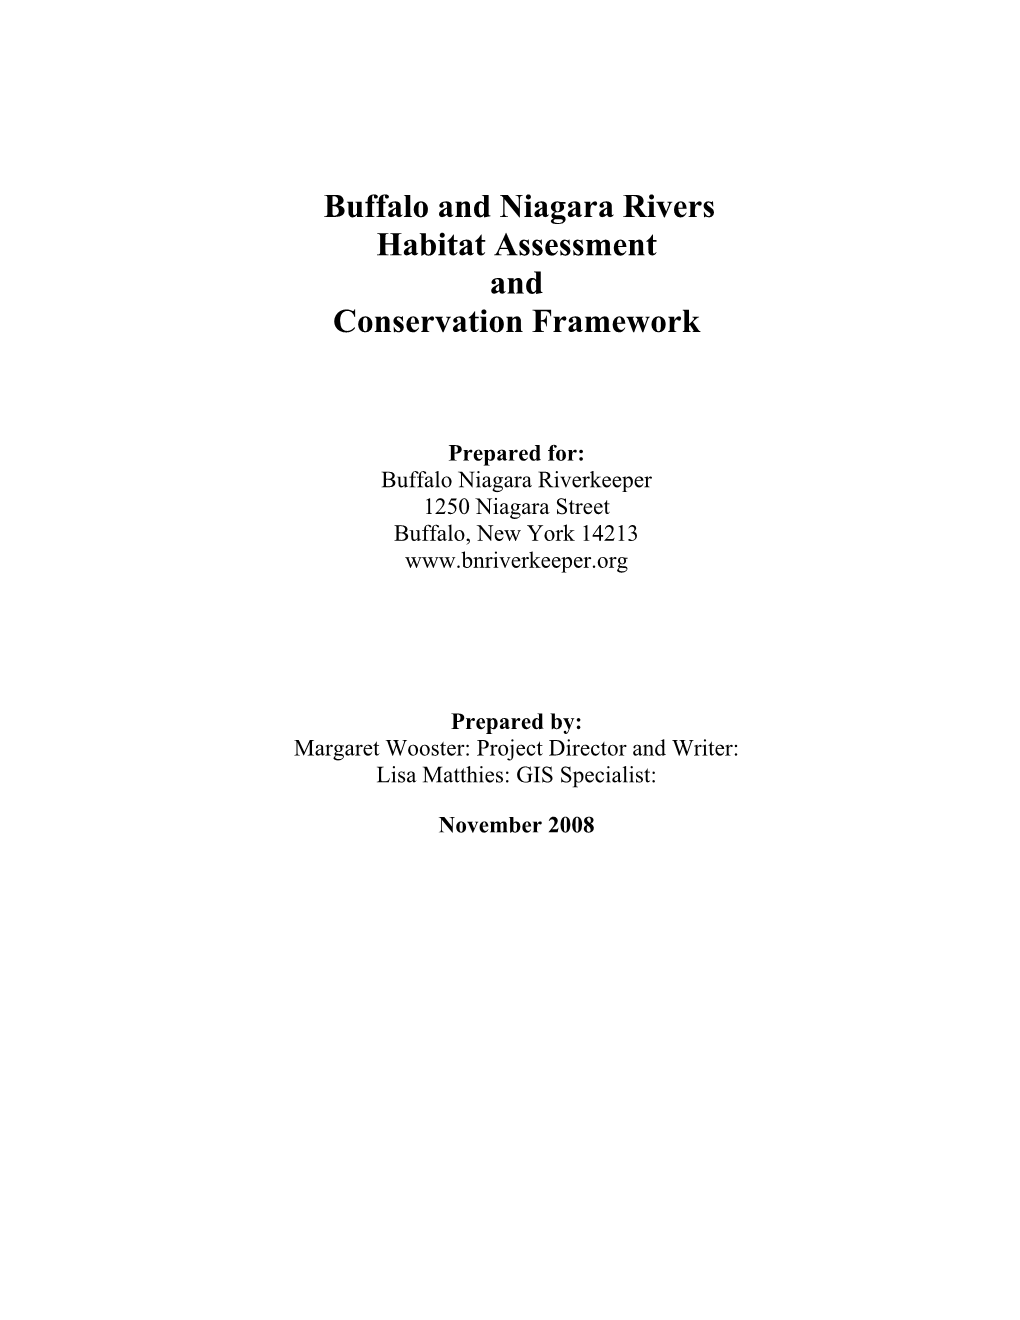 Buffalo and Niagara River Habitat Inventory and Assessment